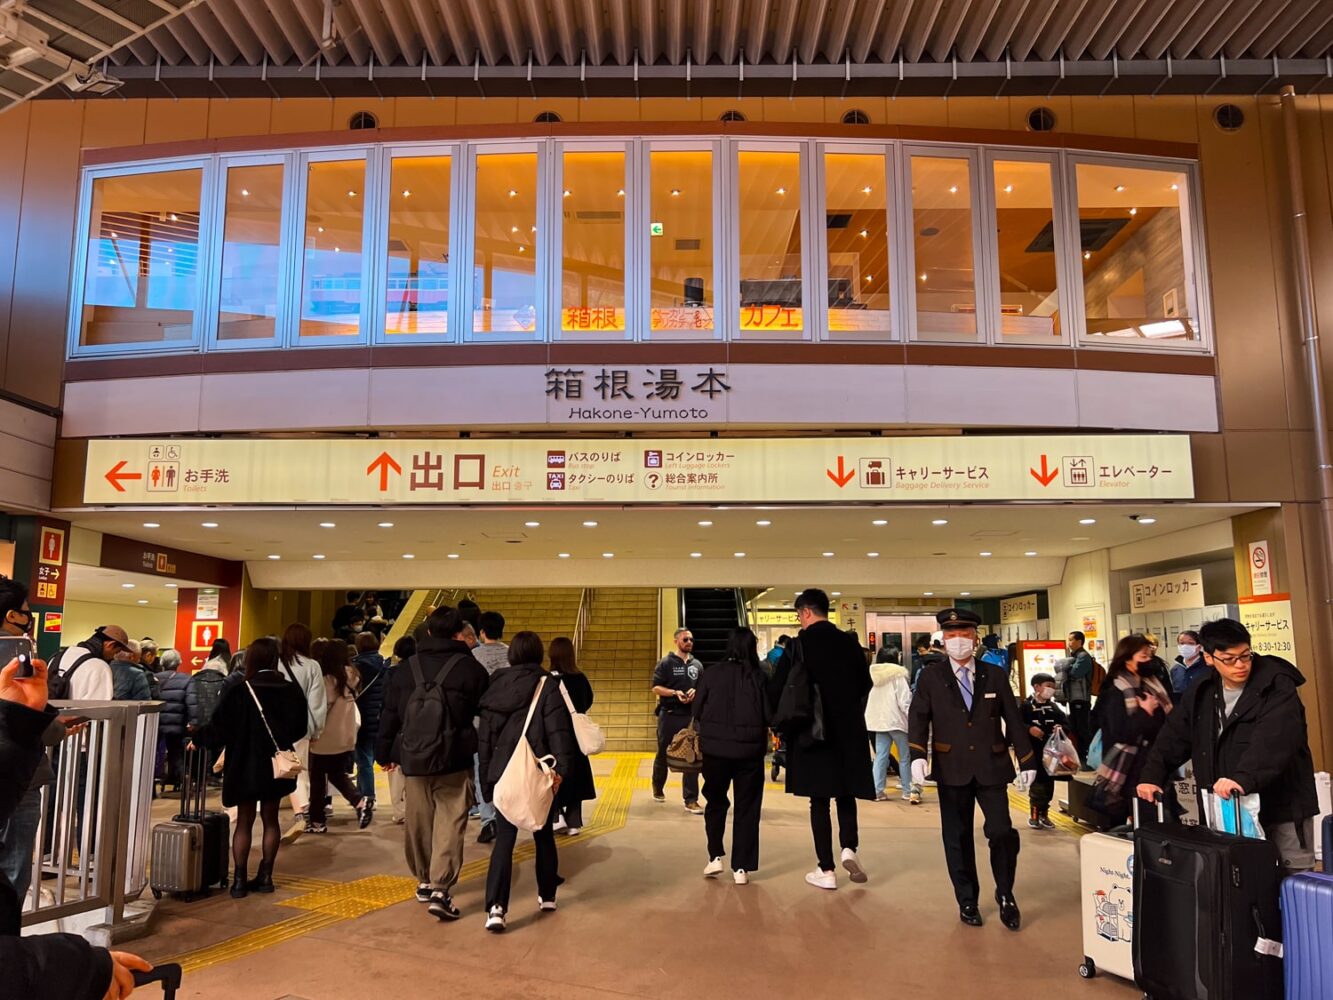 Crowds inside the Hakone-Yumoto train station.